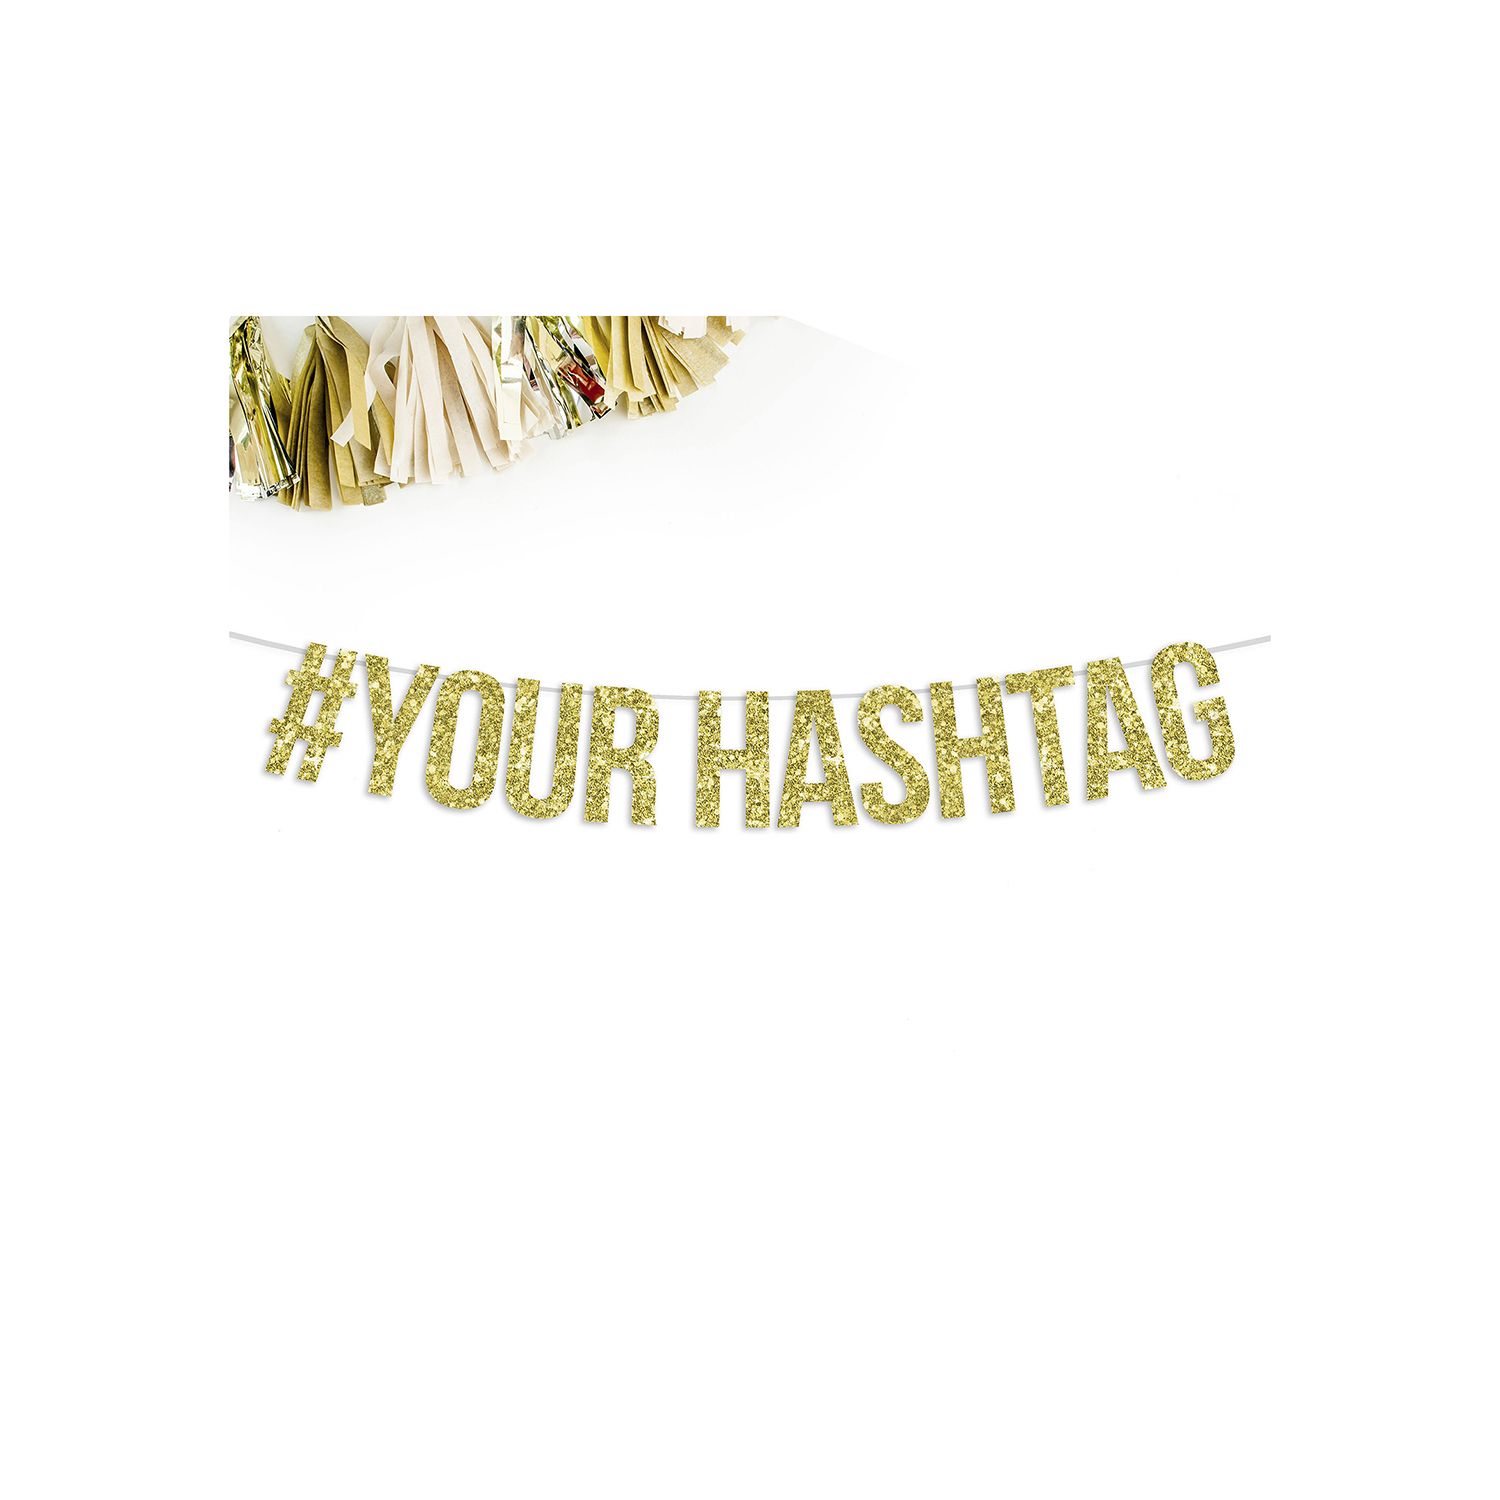 Hashtag-banner